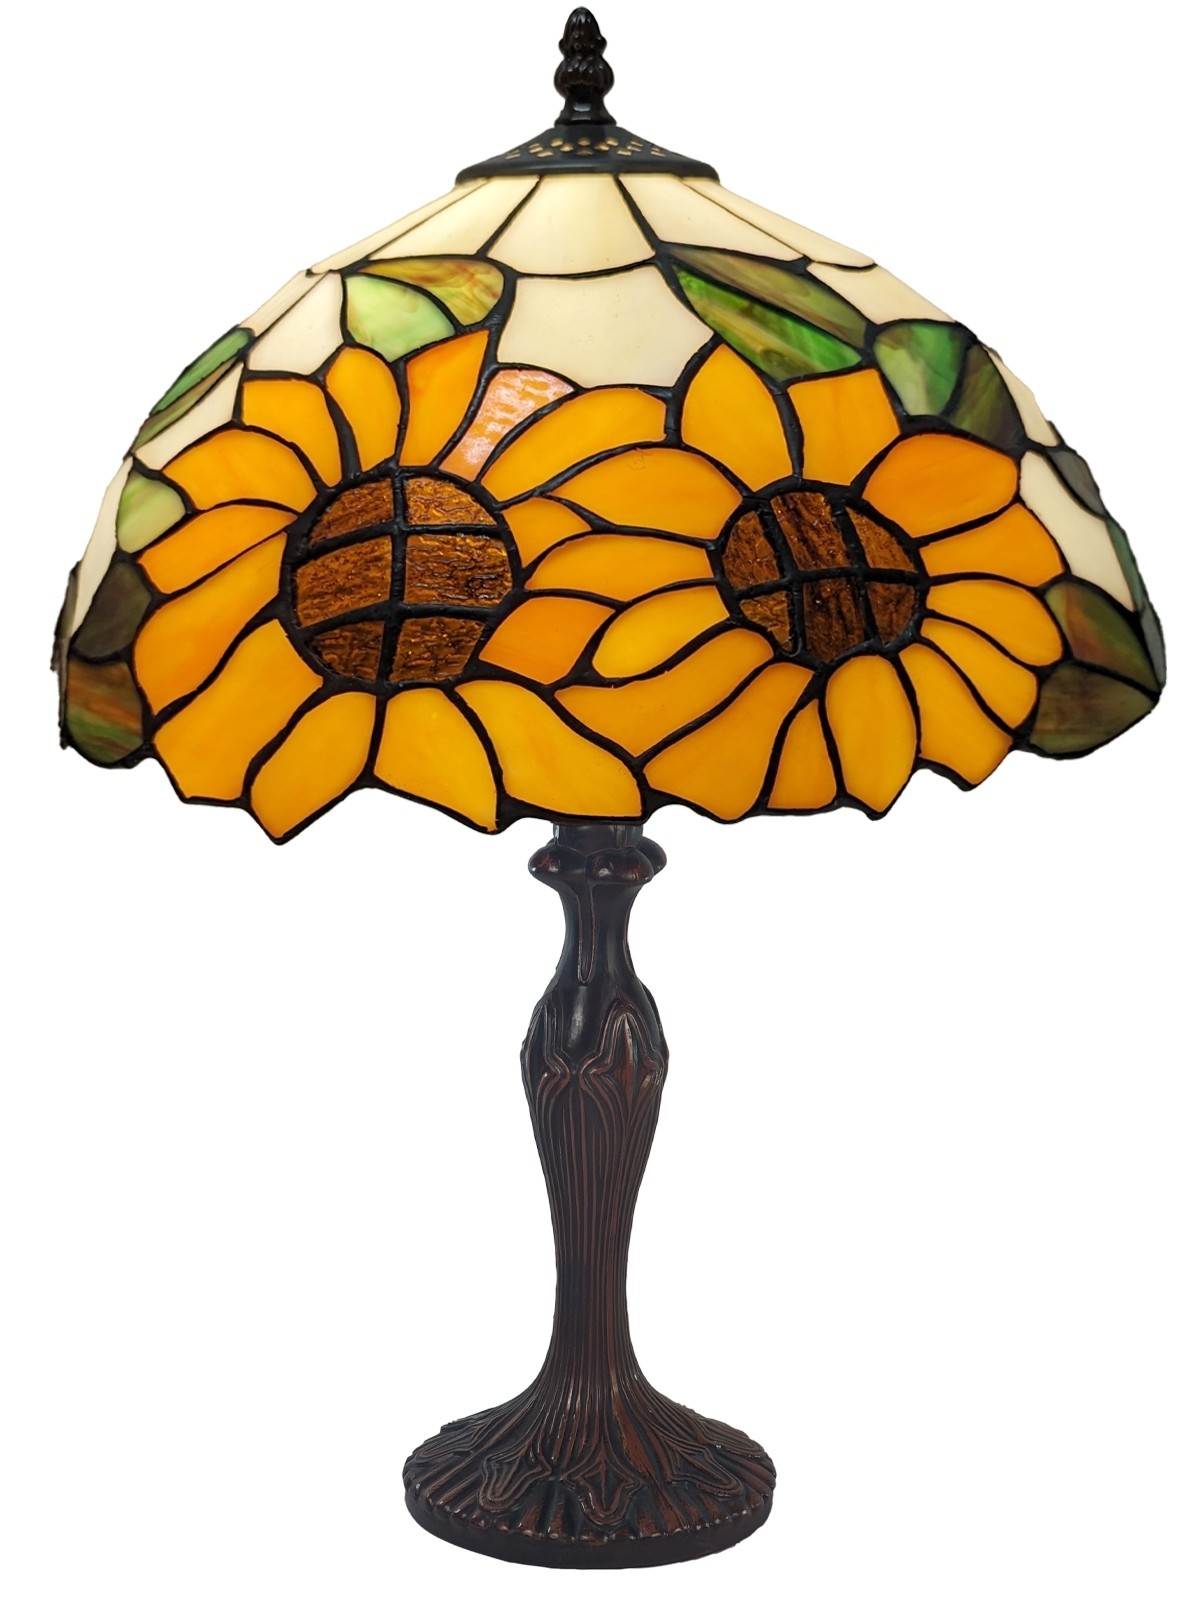 Large Sunflower Tiffany Table Lamp 59cm 